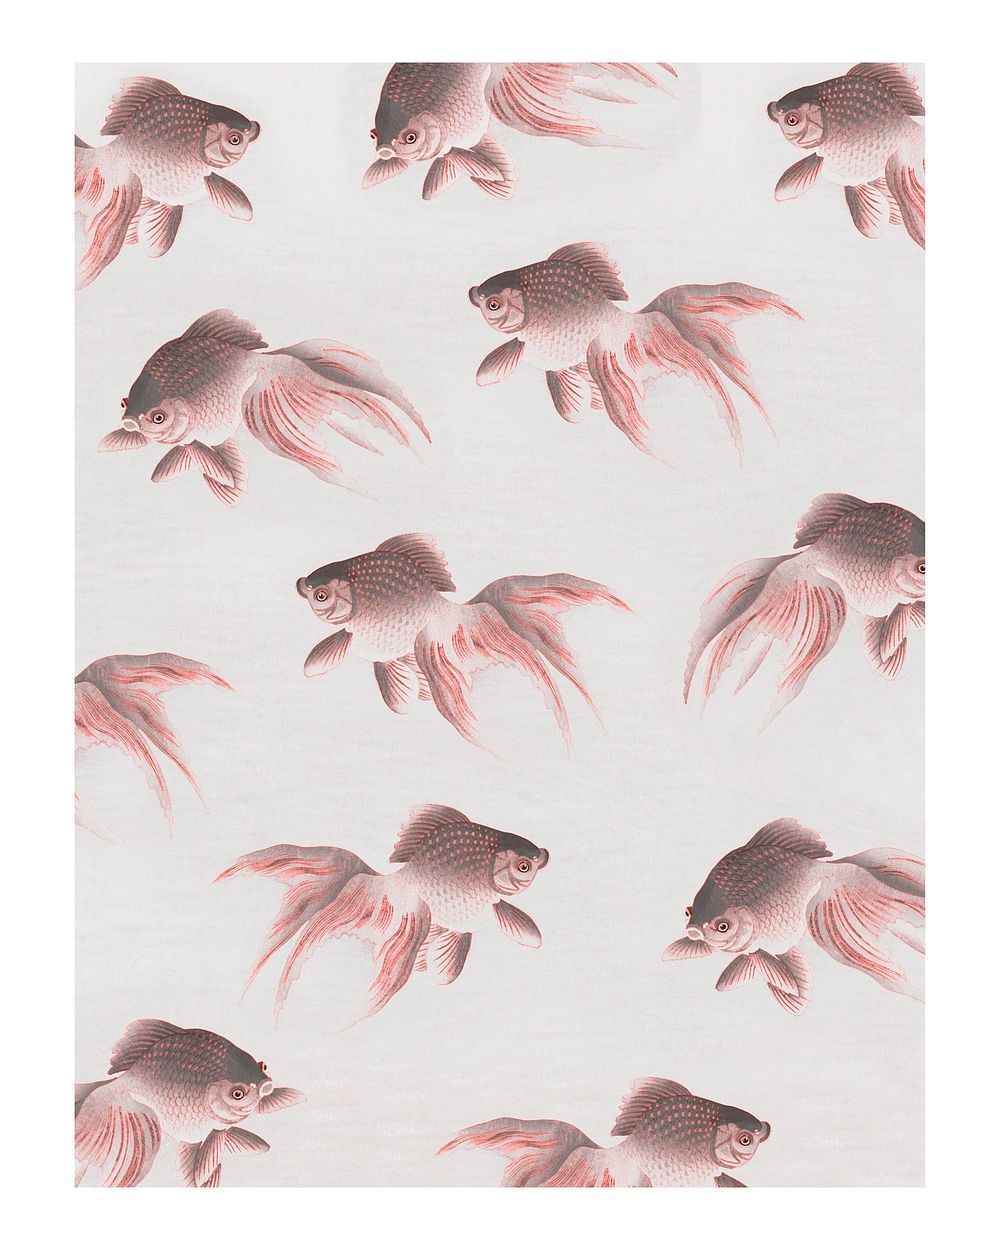 Veiltail goldfish pattern vintage illustration wall art print and poster design remix from original artwork.